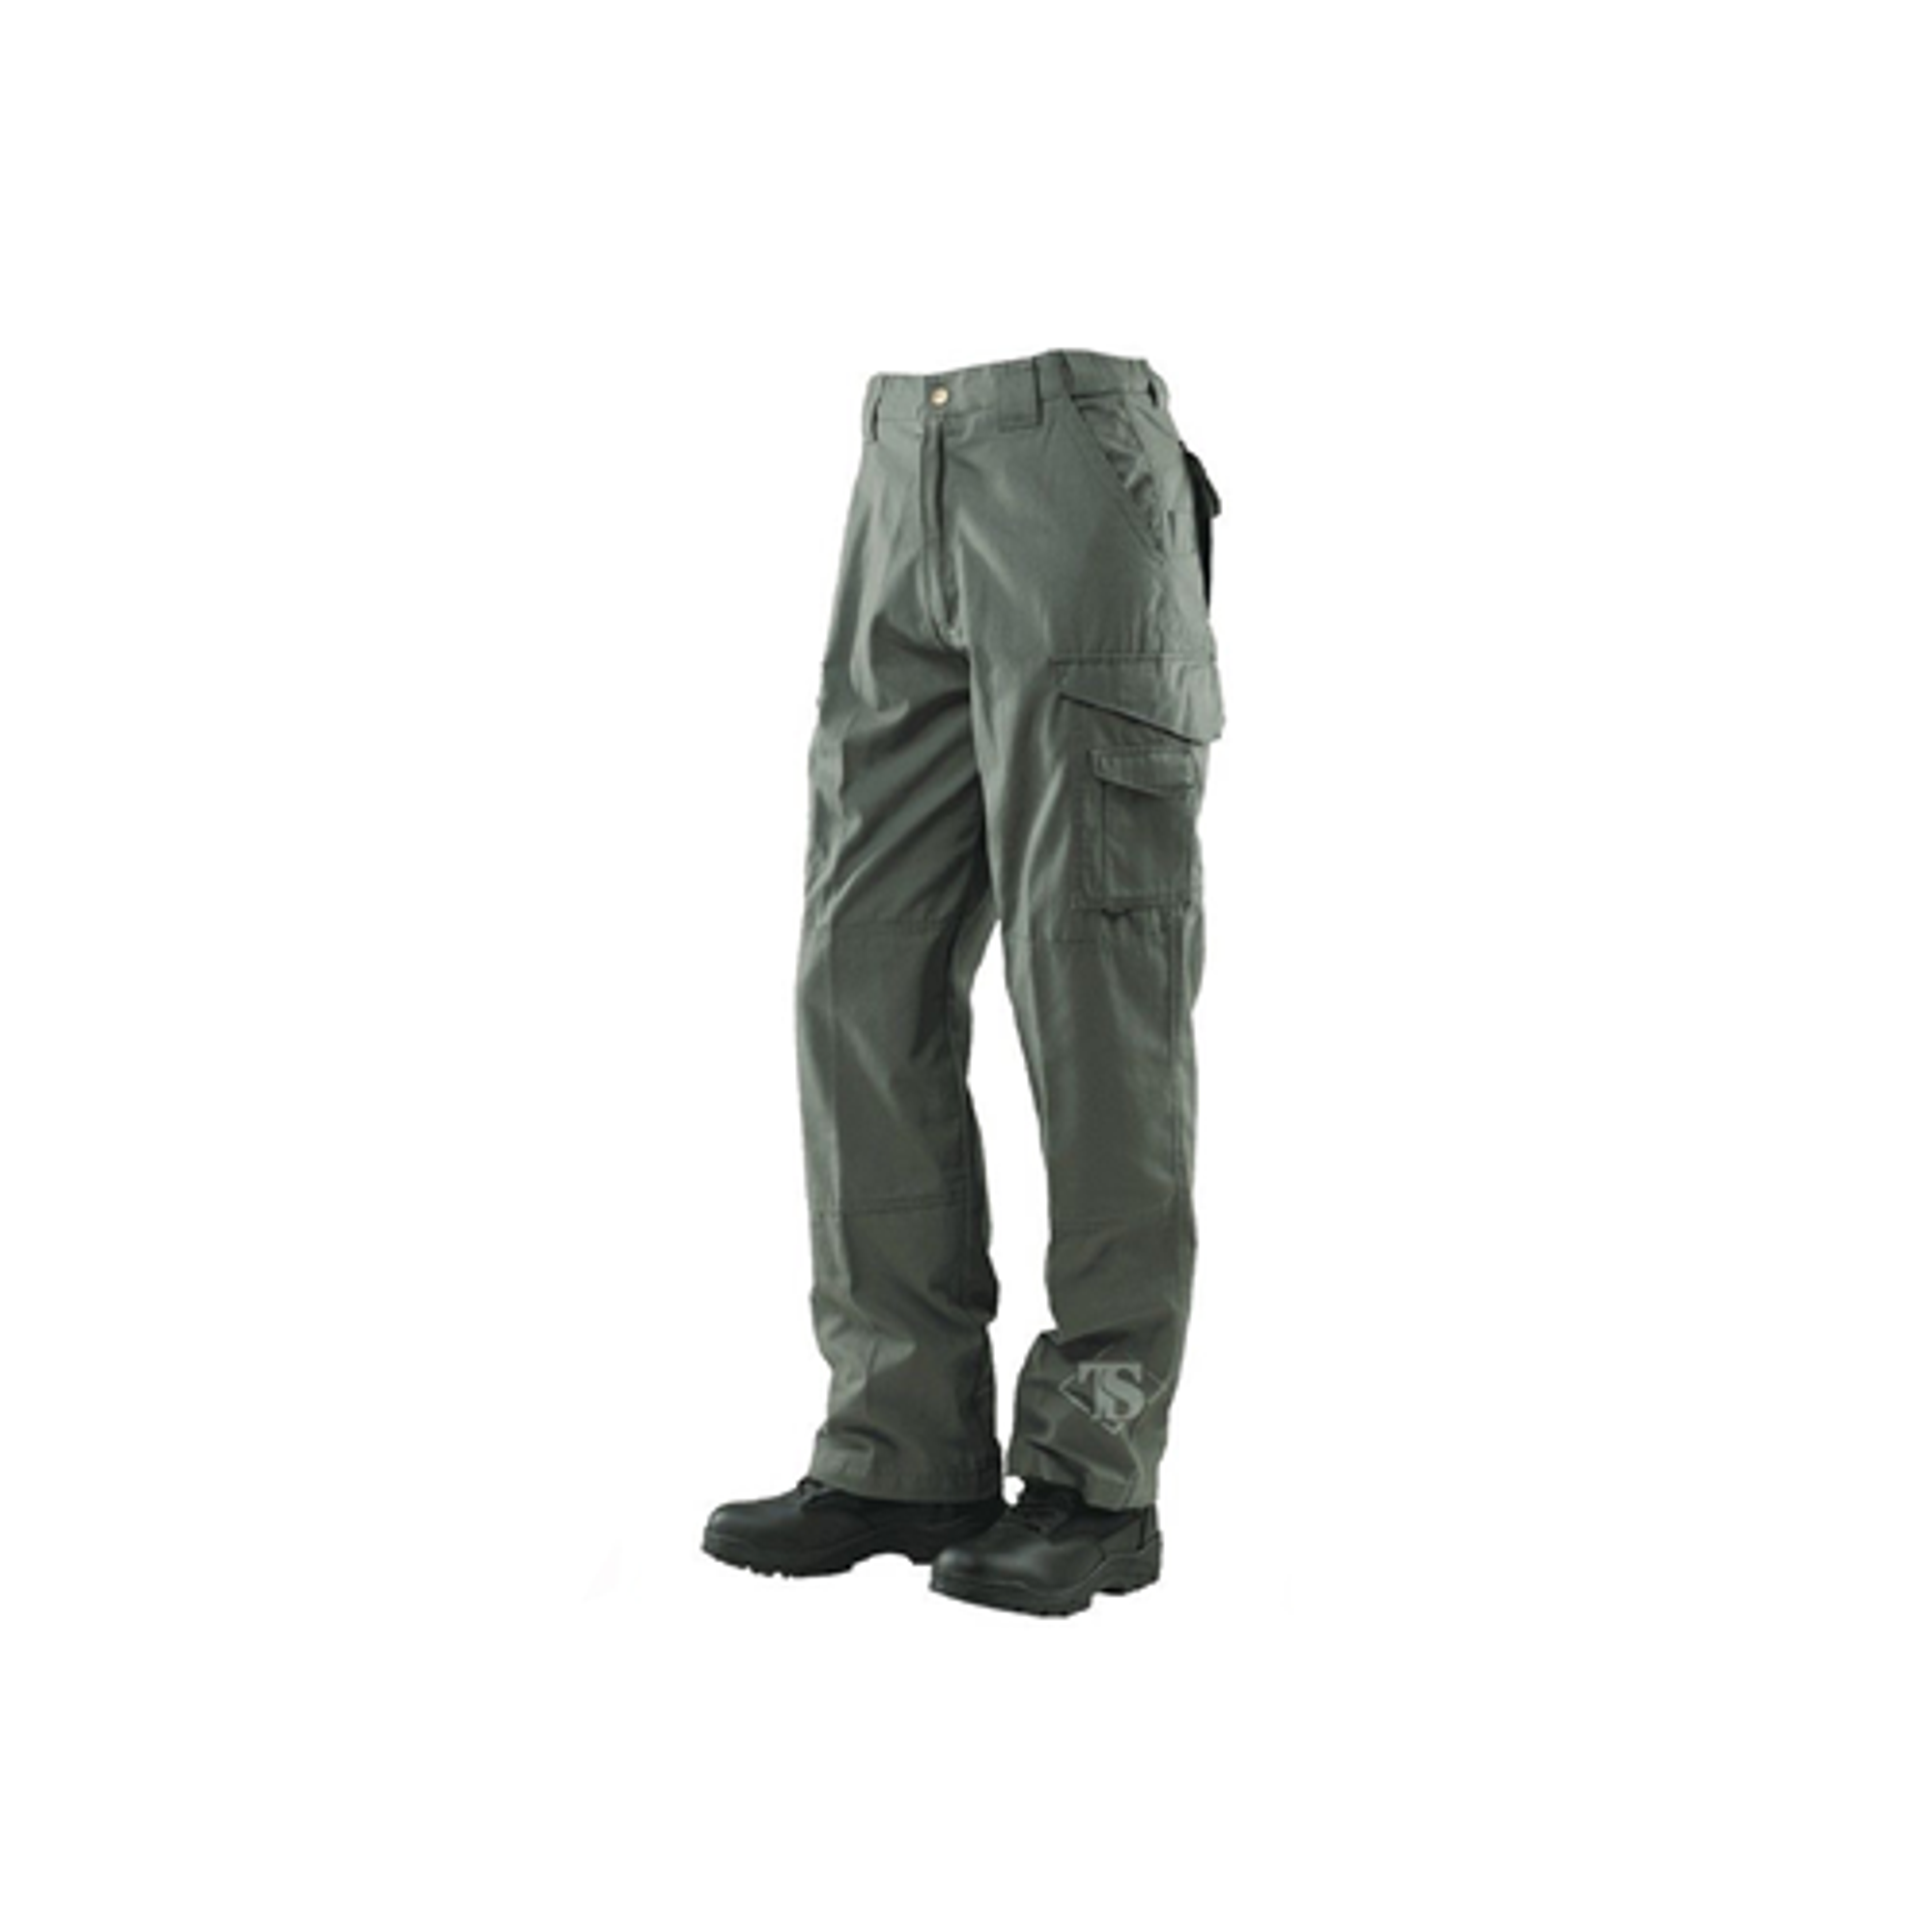 24-7 Original Tactical Pants - 6.5oz - Od Green - KRTSP-1064047